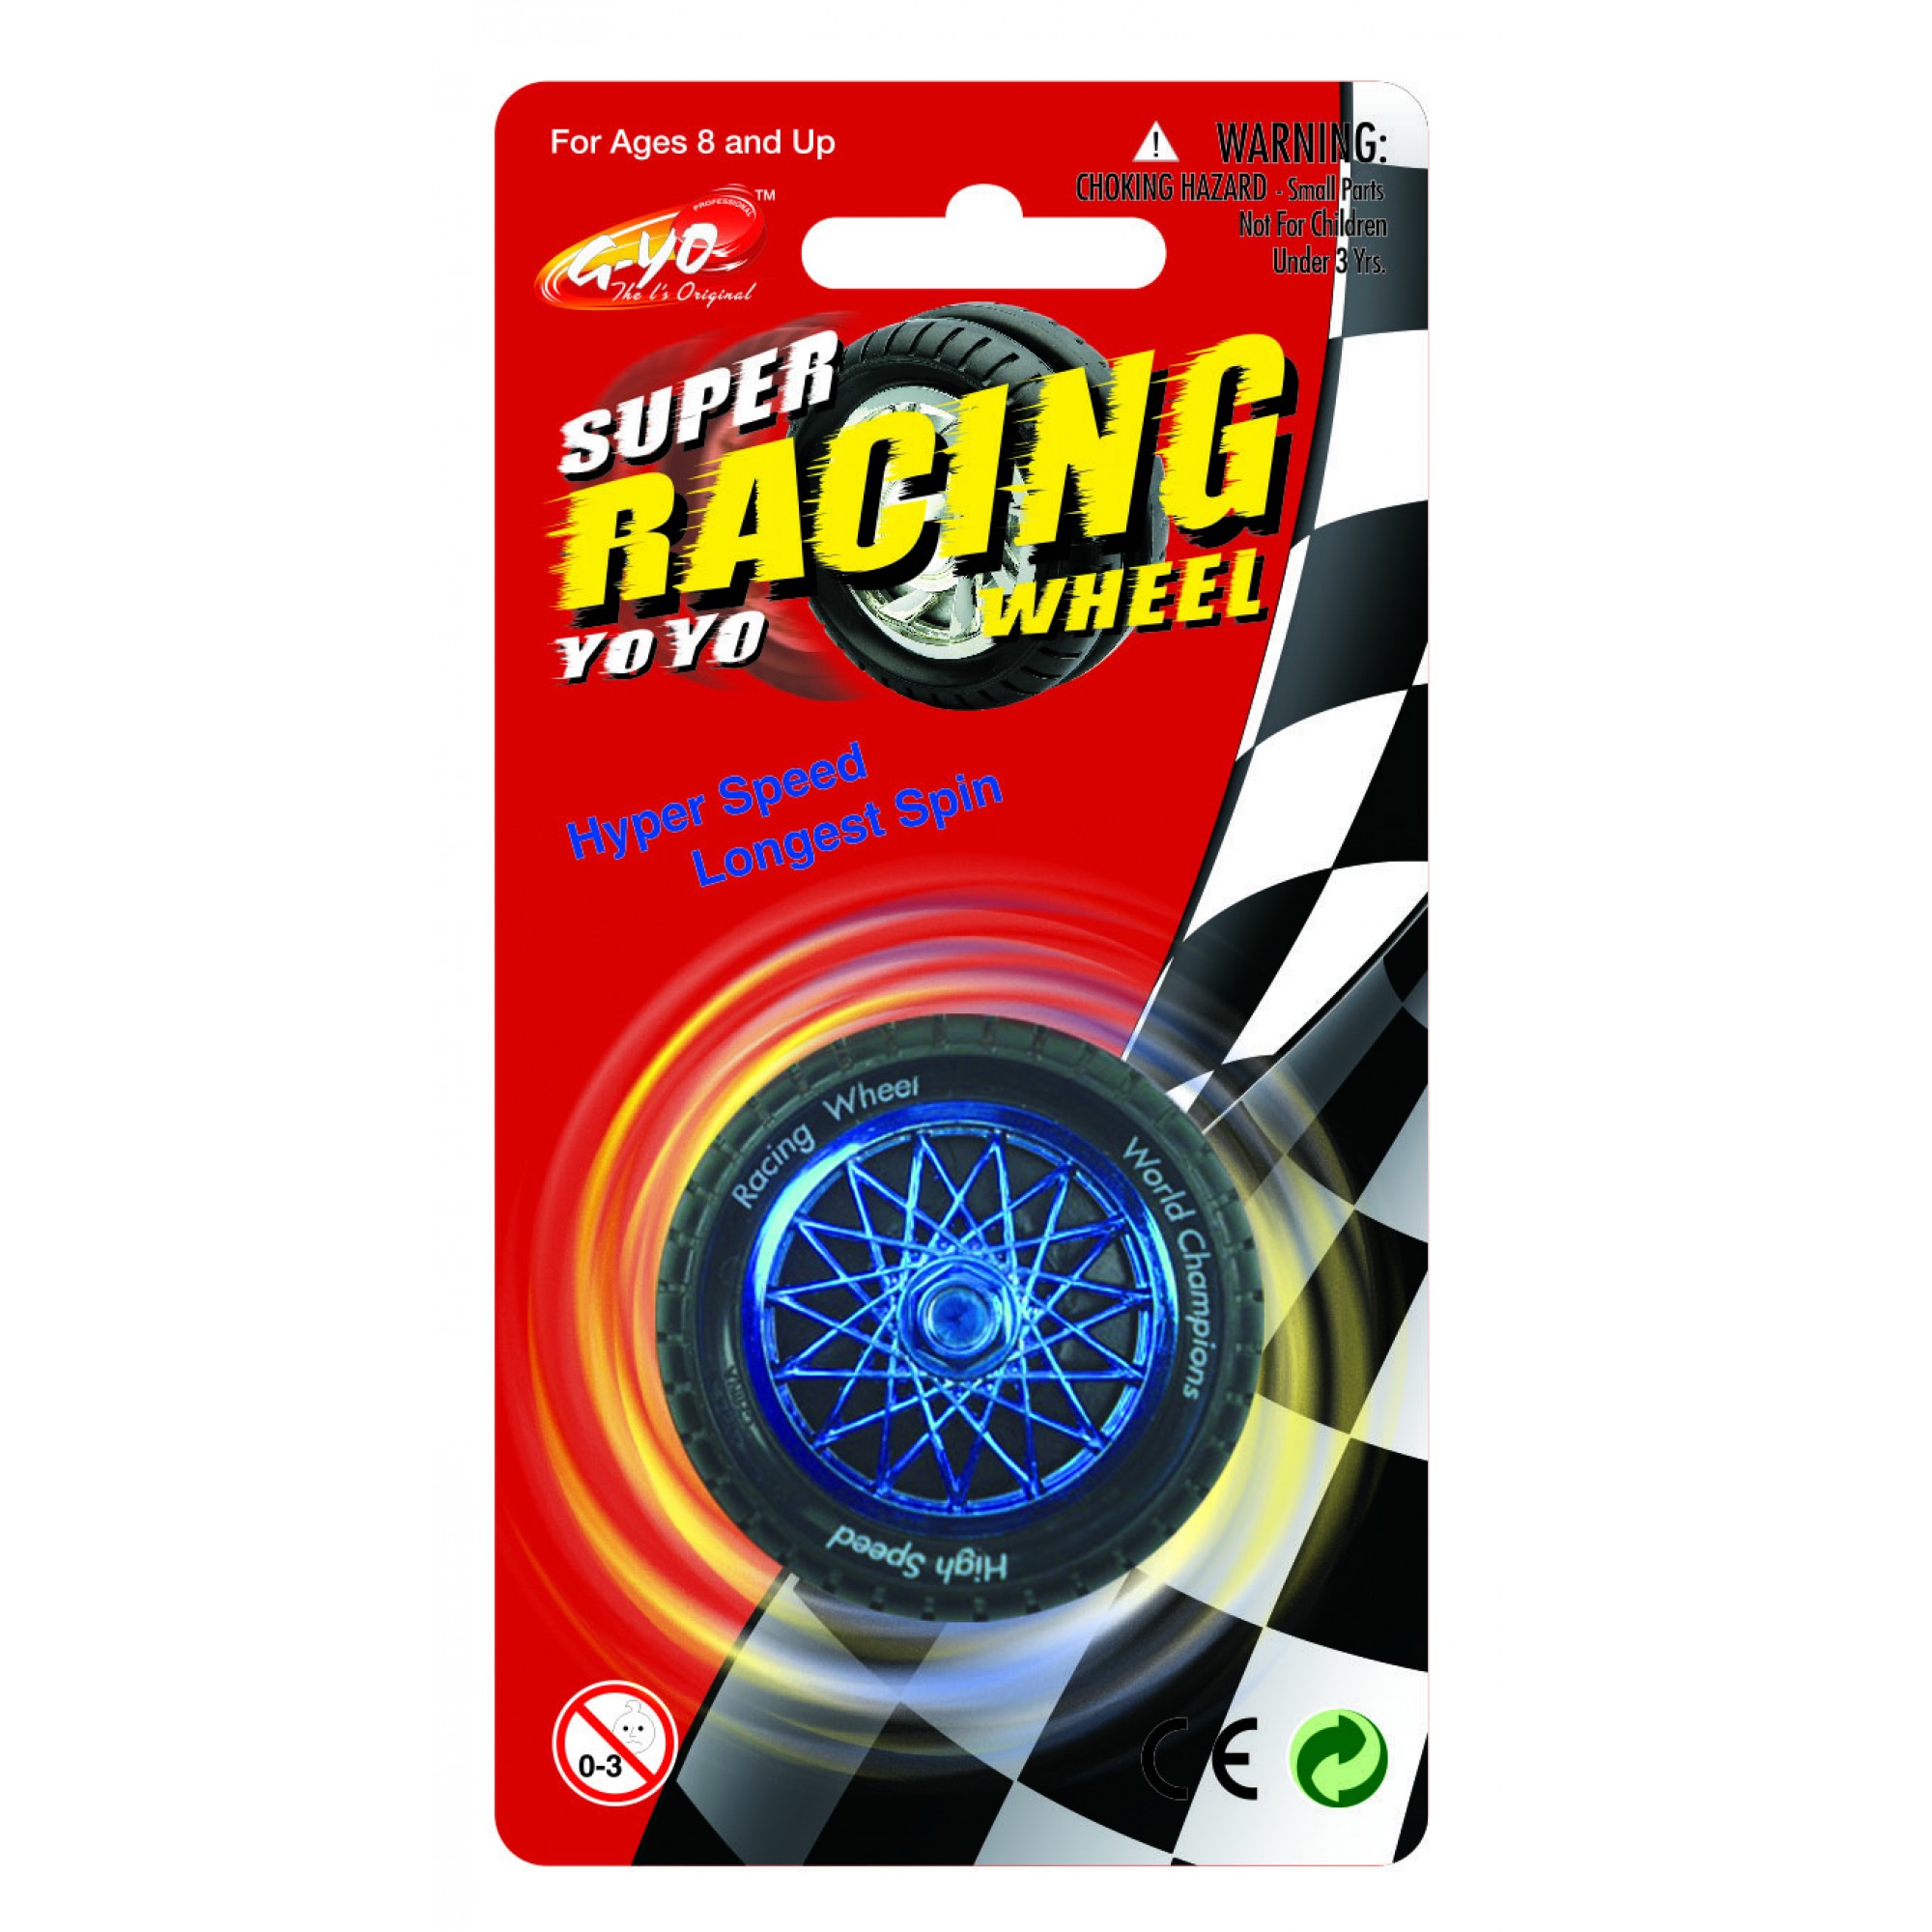 Racing Wheel Yo Yo